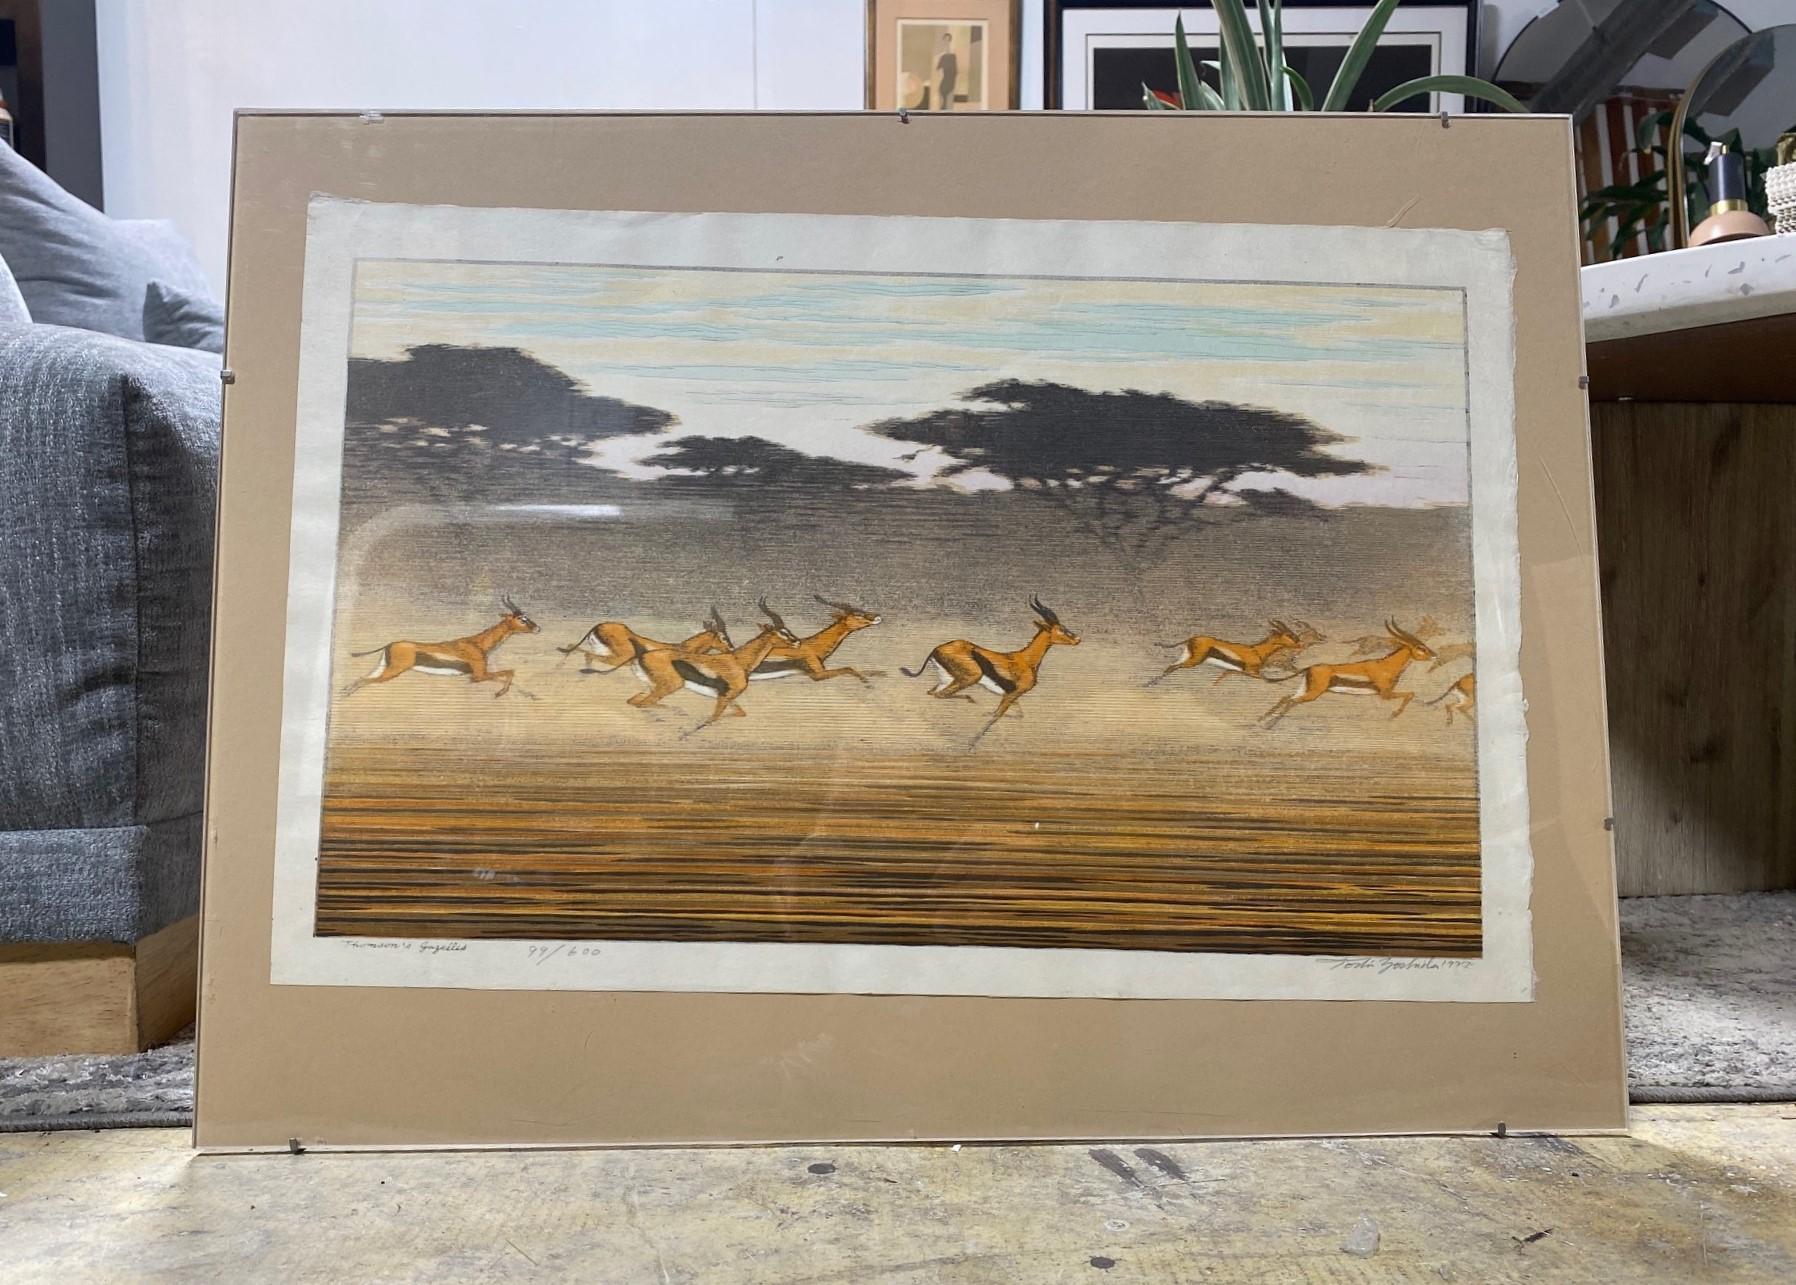 A truly wonderful, original woodblock print by Japanese Sosaku-Hanga artist Toshi Yoshida, son of famed master printmaker/artist Hiroshi Yoshida.  This work titled 